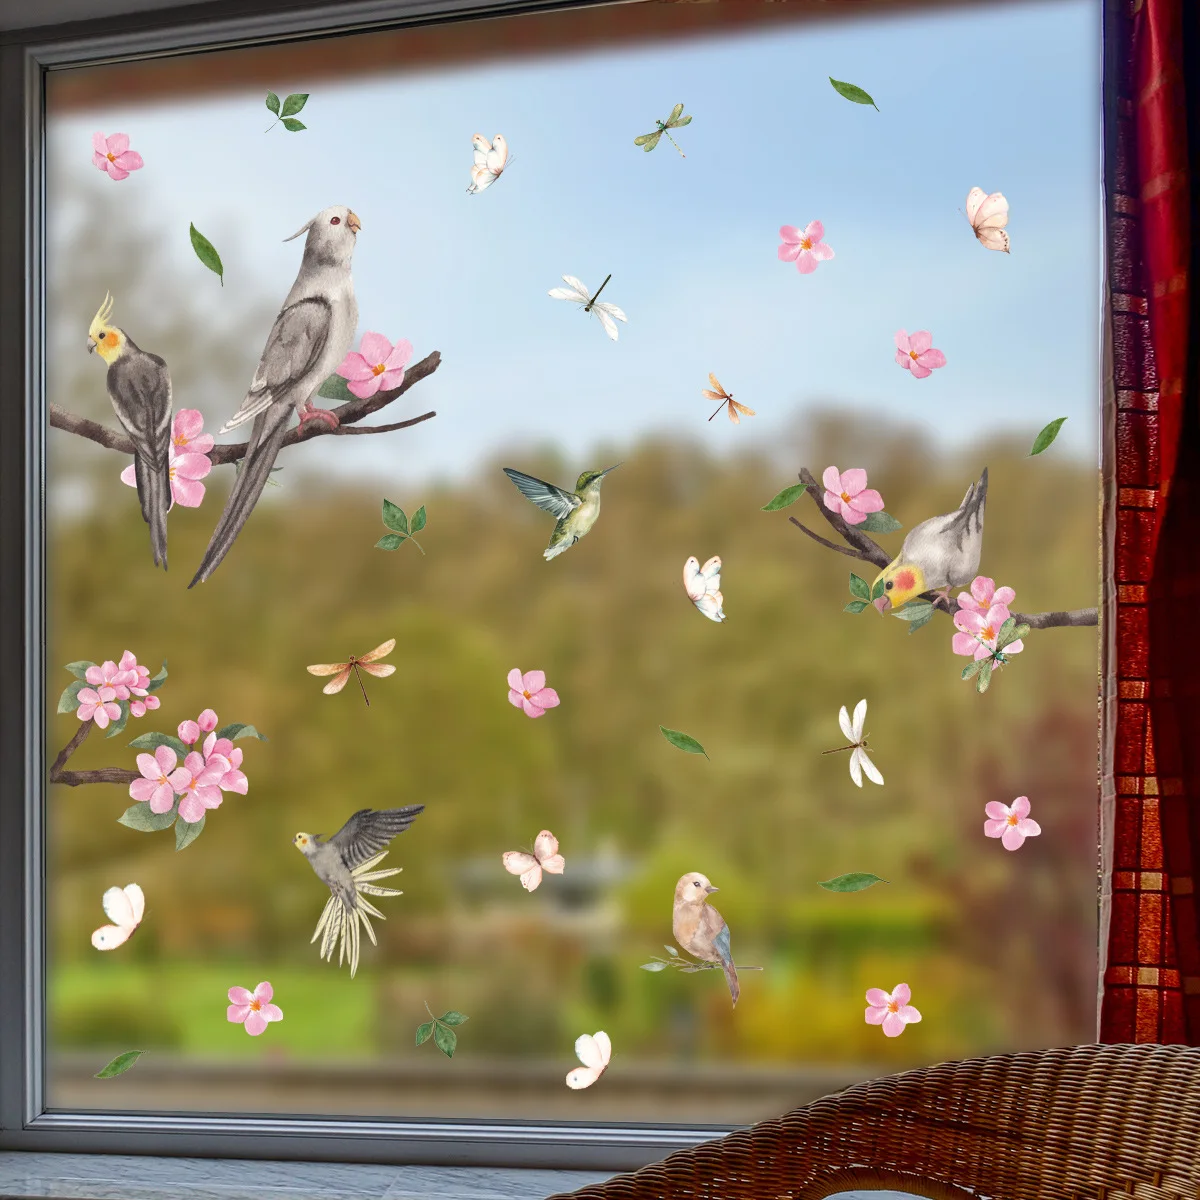 

Branch Bird Peach Blossom Chinese Wind Wall Sticker Home Decor Sticker Glass Sticker Window Visual Decorative Wallpaper